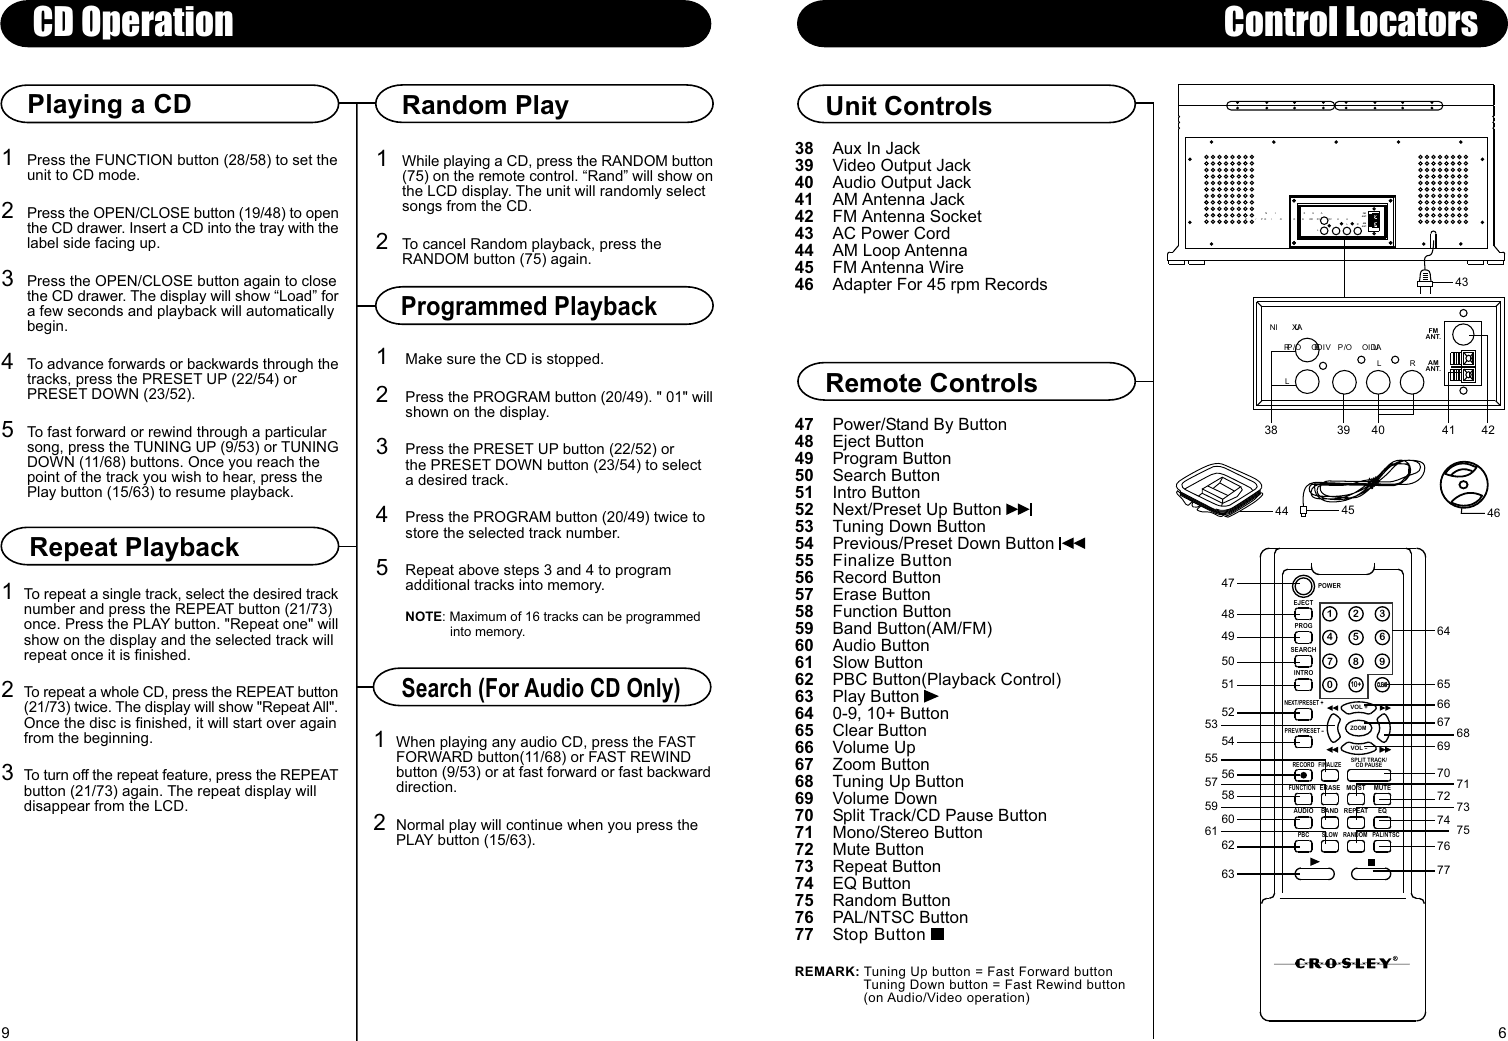 Page 4 of 8 - Crosley-Radio Crosley-Radio-Songwriter-Cd-Burner-Cr248-Users-Manual- 910-252800-003.FH10  Crosley-radio-songwriter-cd-burner-cr248-users-manual